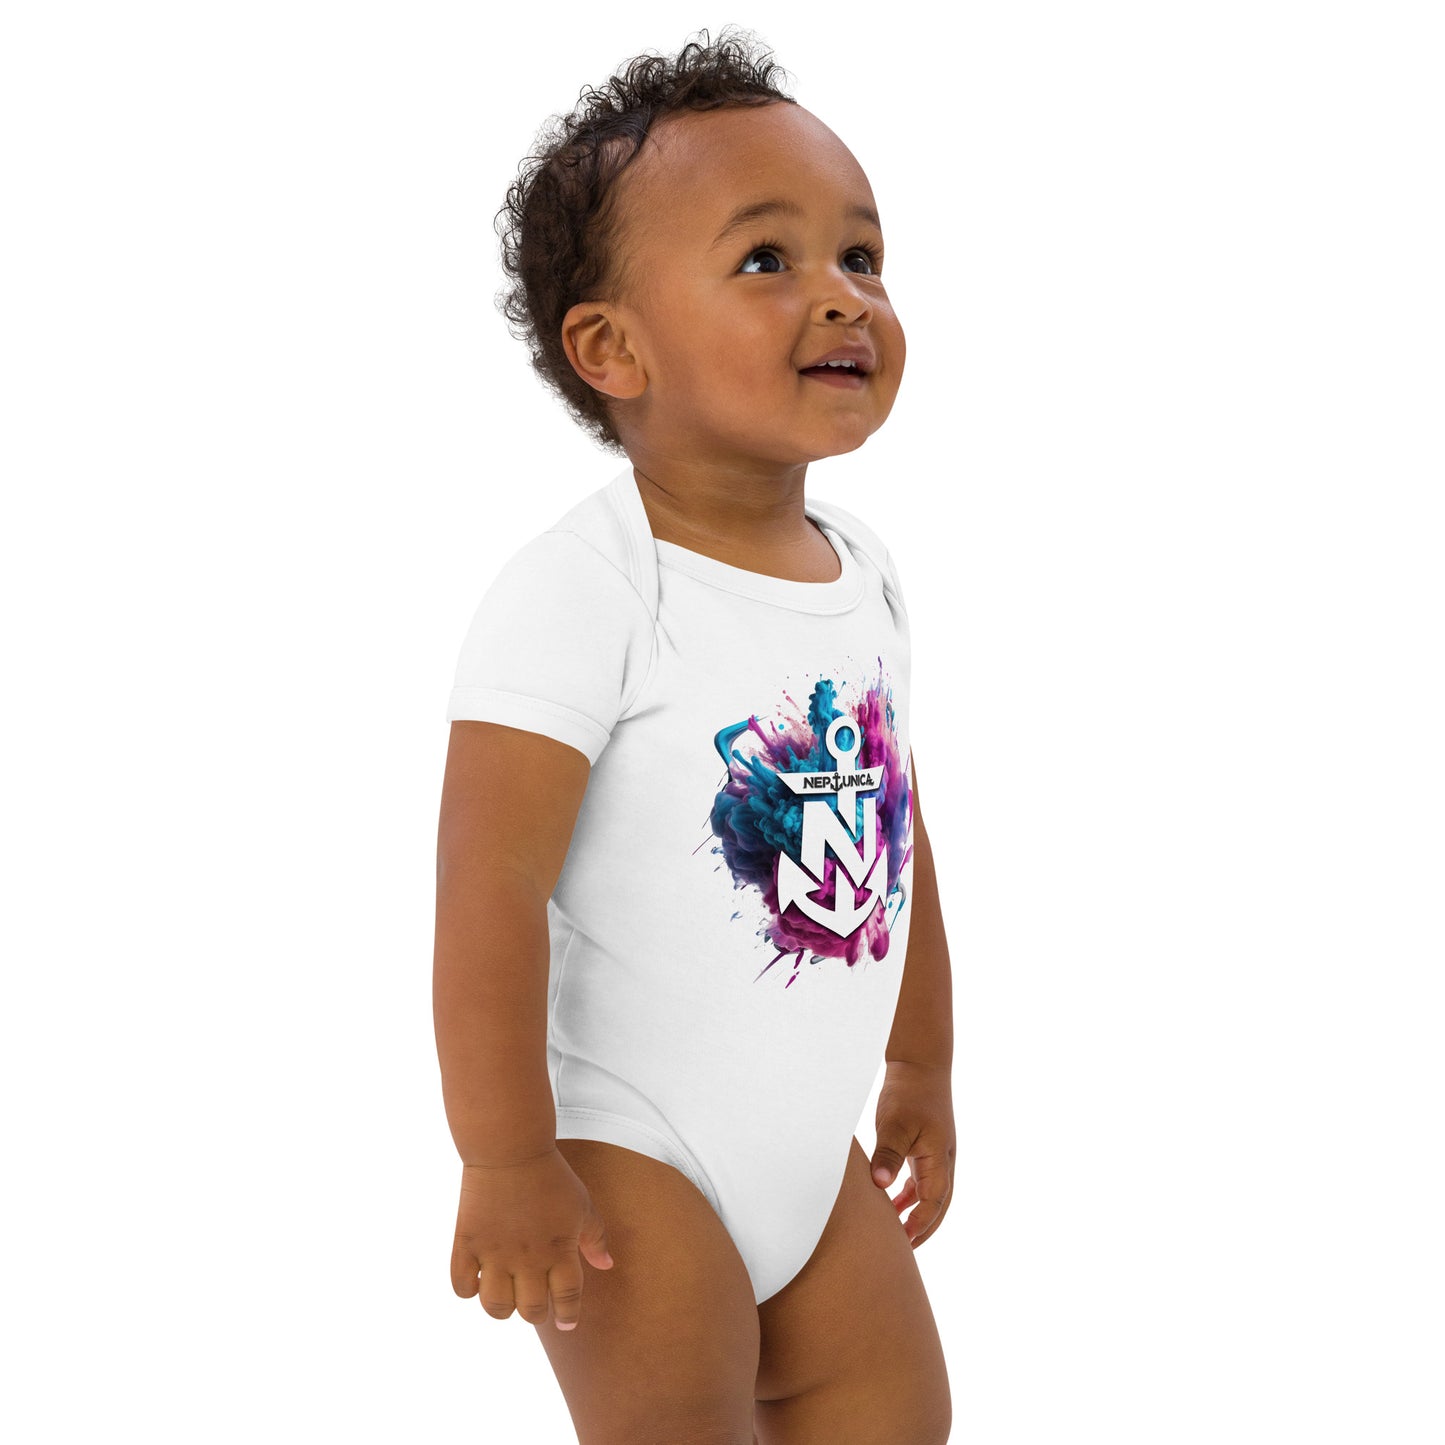 Neptunica Organic Cotton Baby Bodysuit | Colorsplash Edition